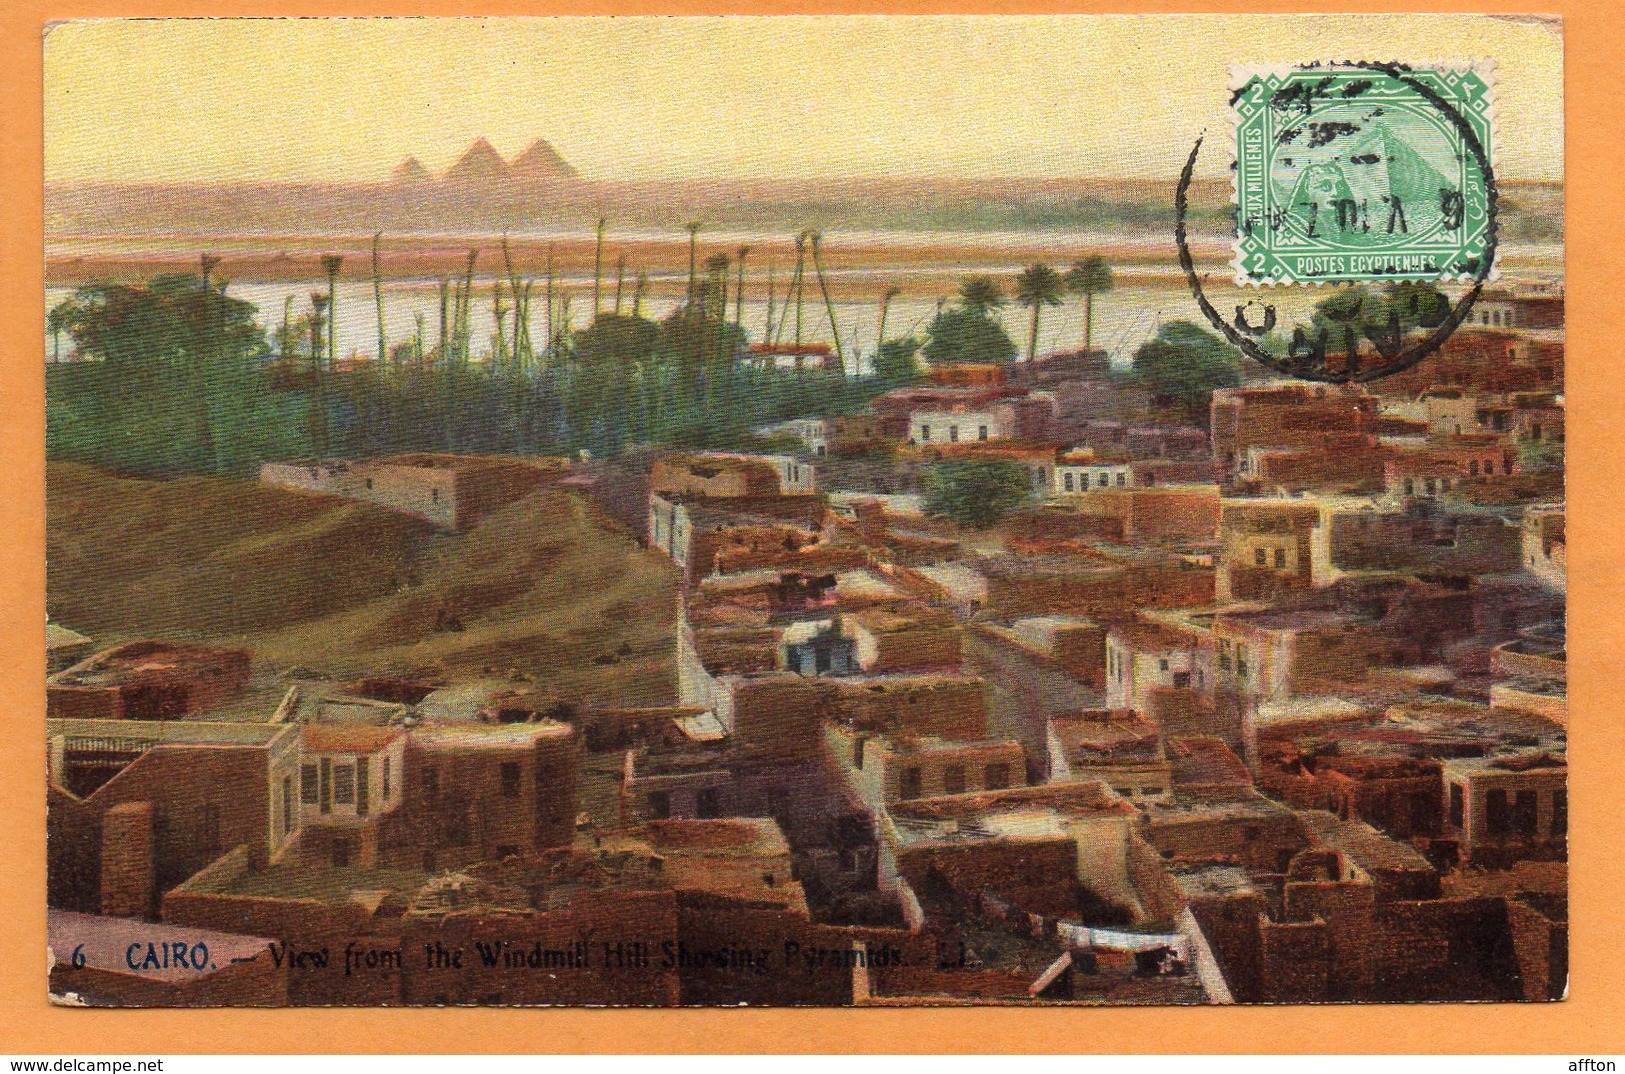 Cairo Egypt 1911 Postcard Mailed - Cairo